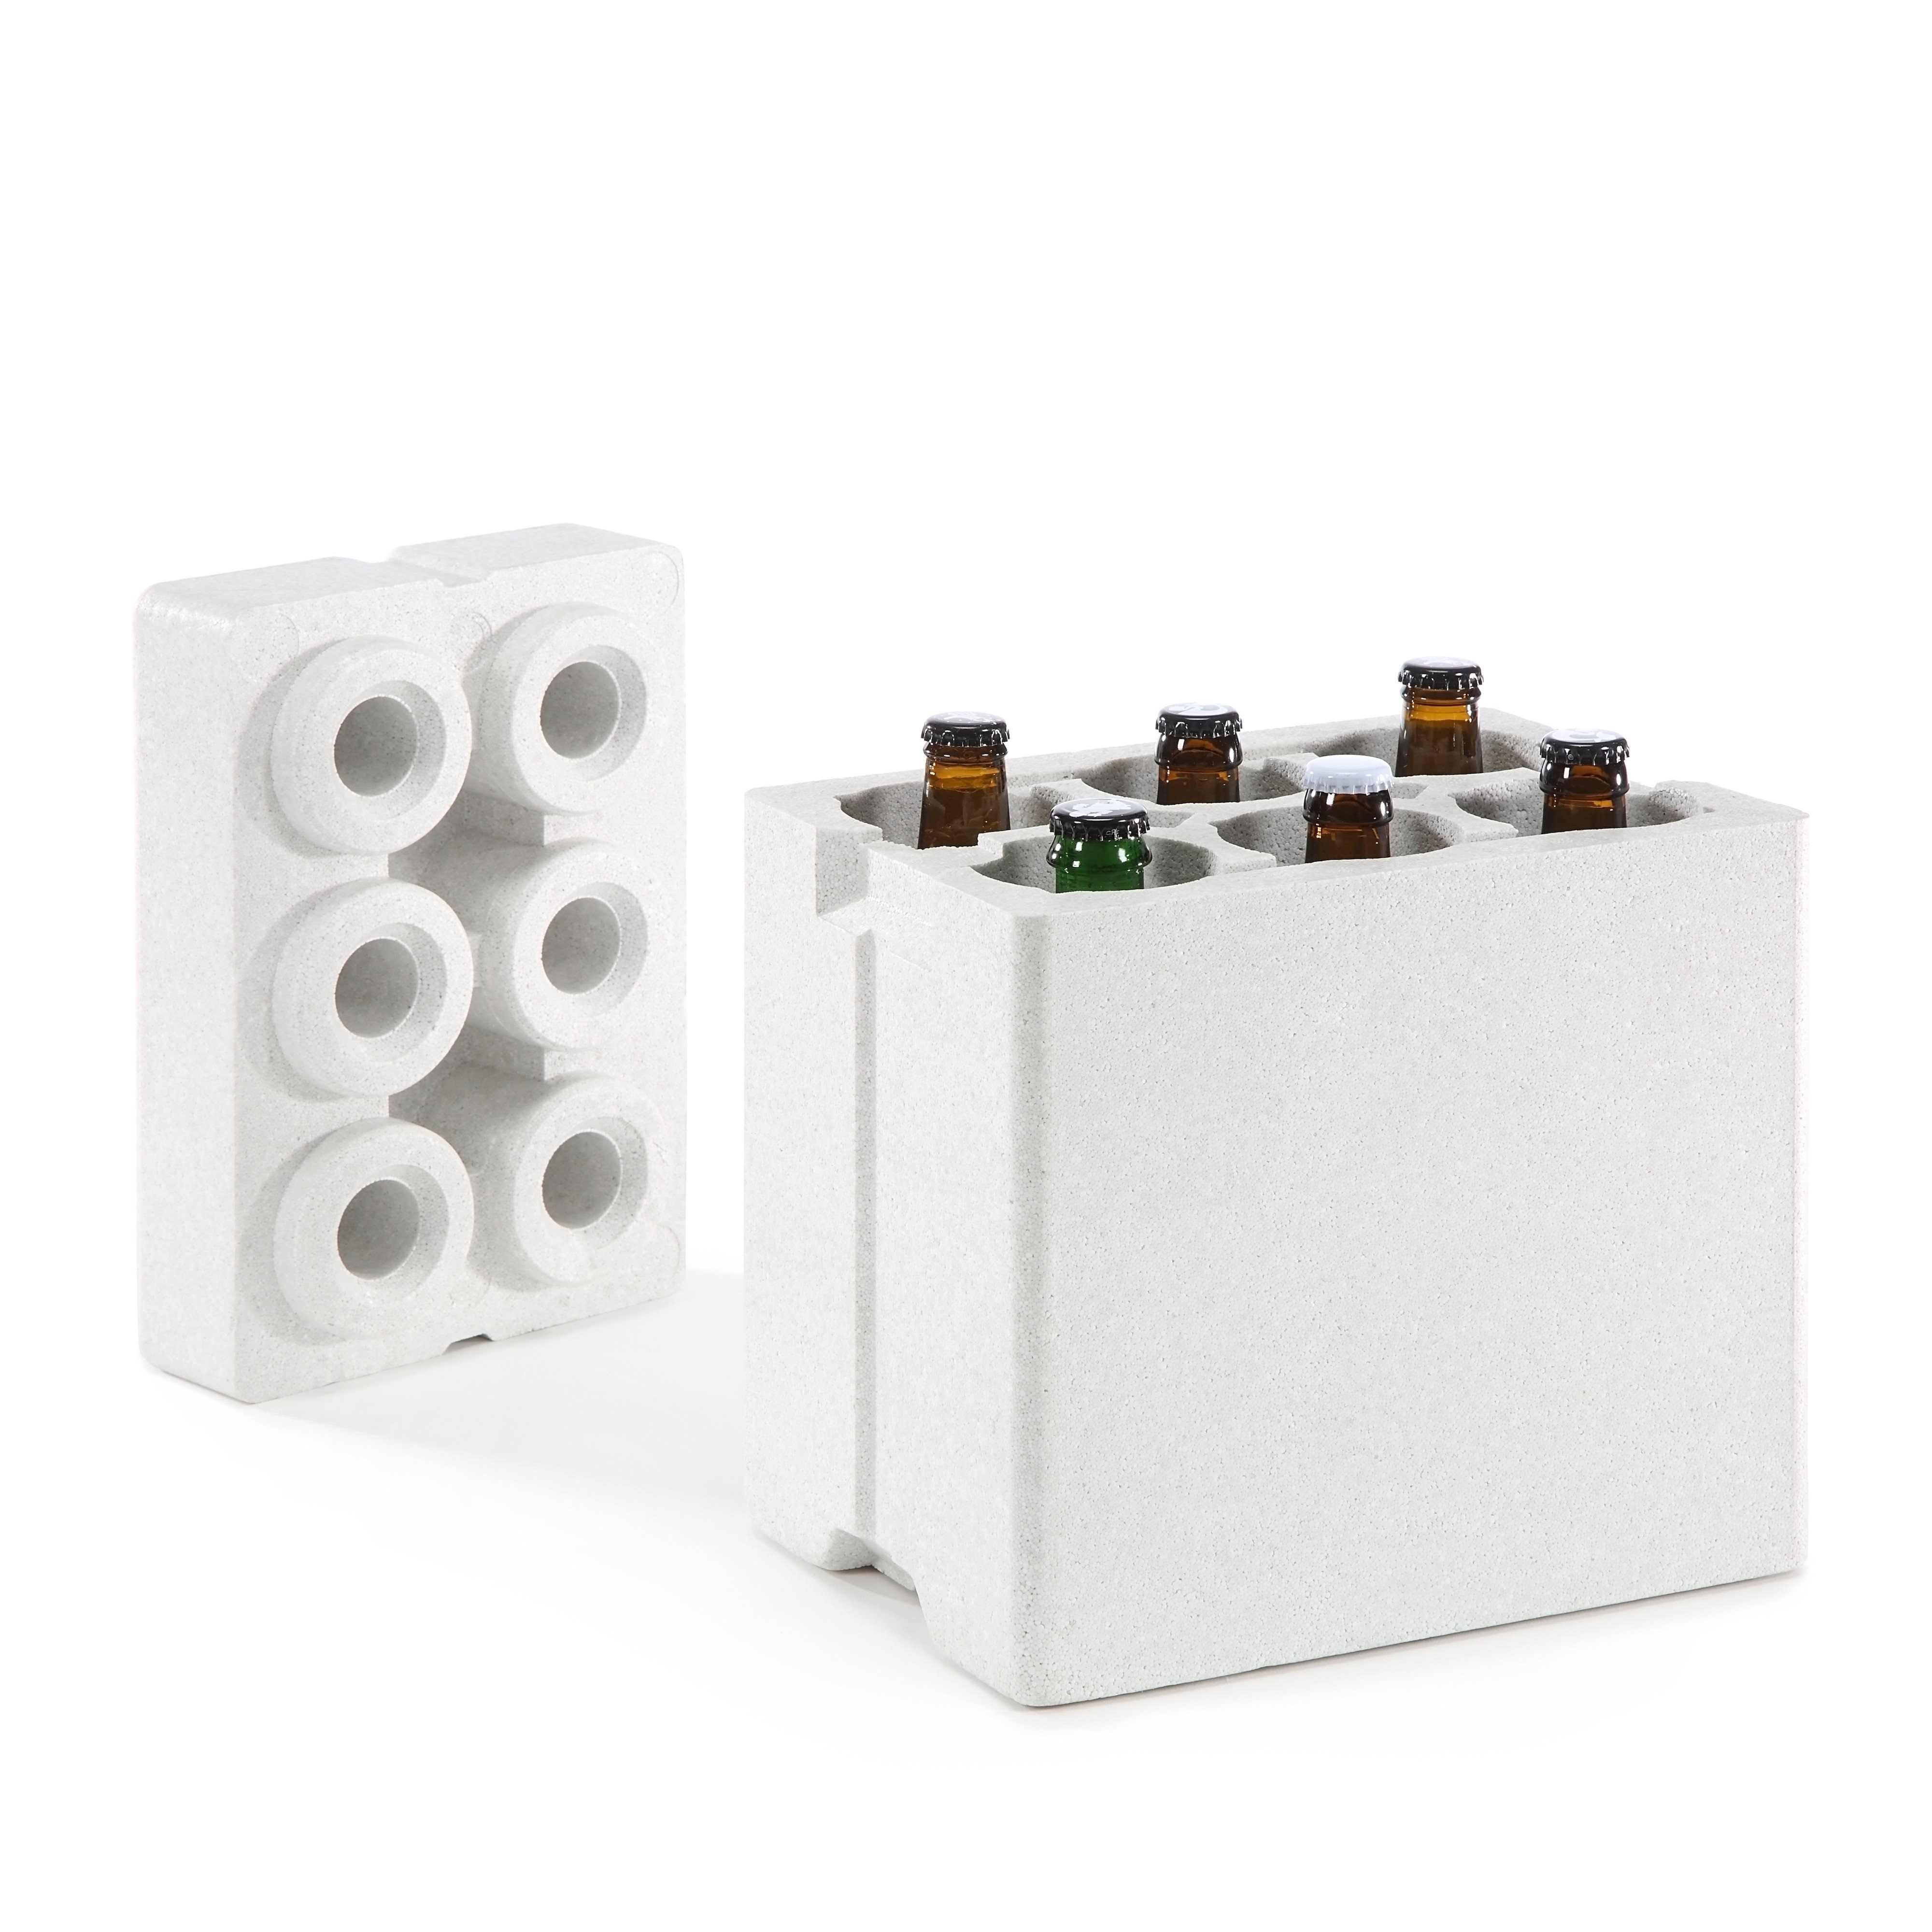 Polystyrene Bottle Protectors - PERBACCO 6-BOTTLE BEER BOX